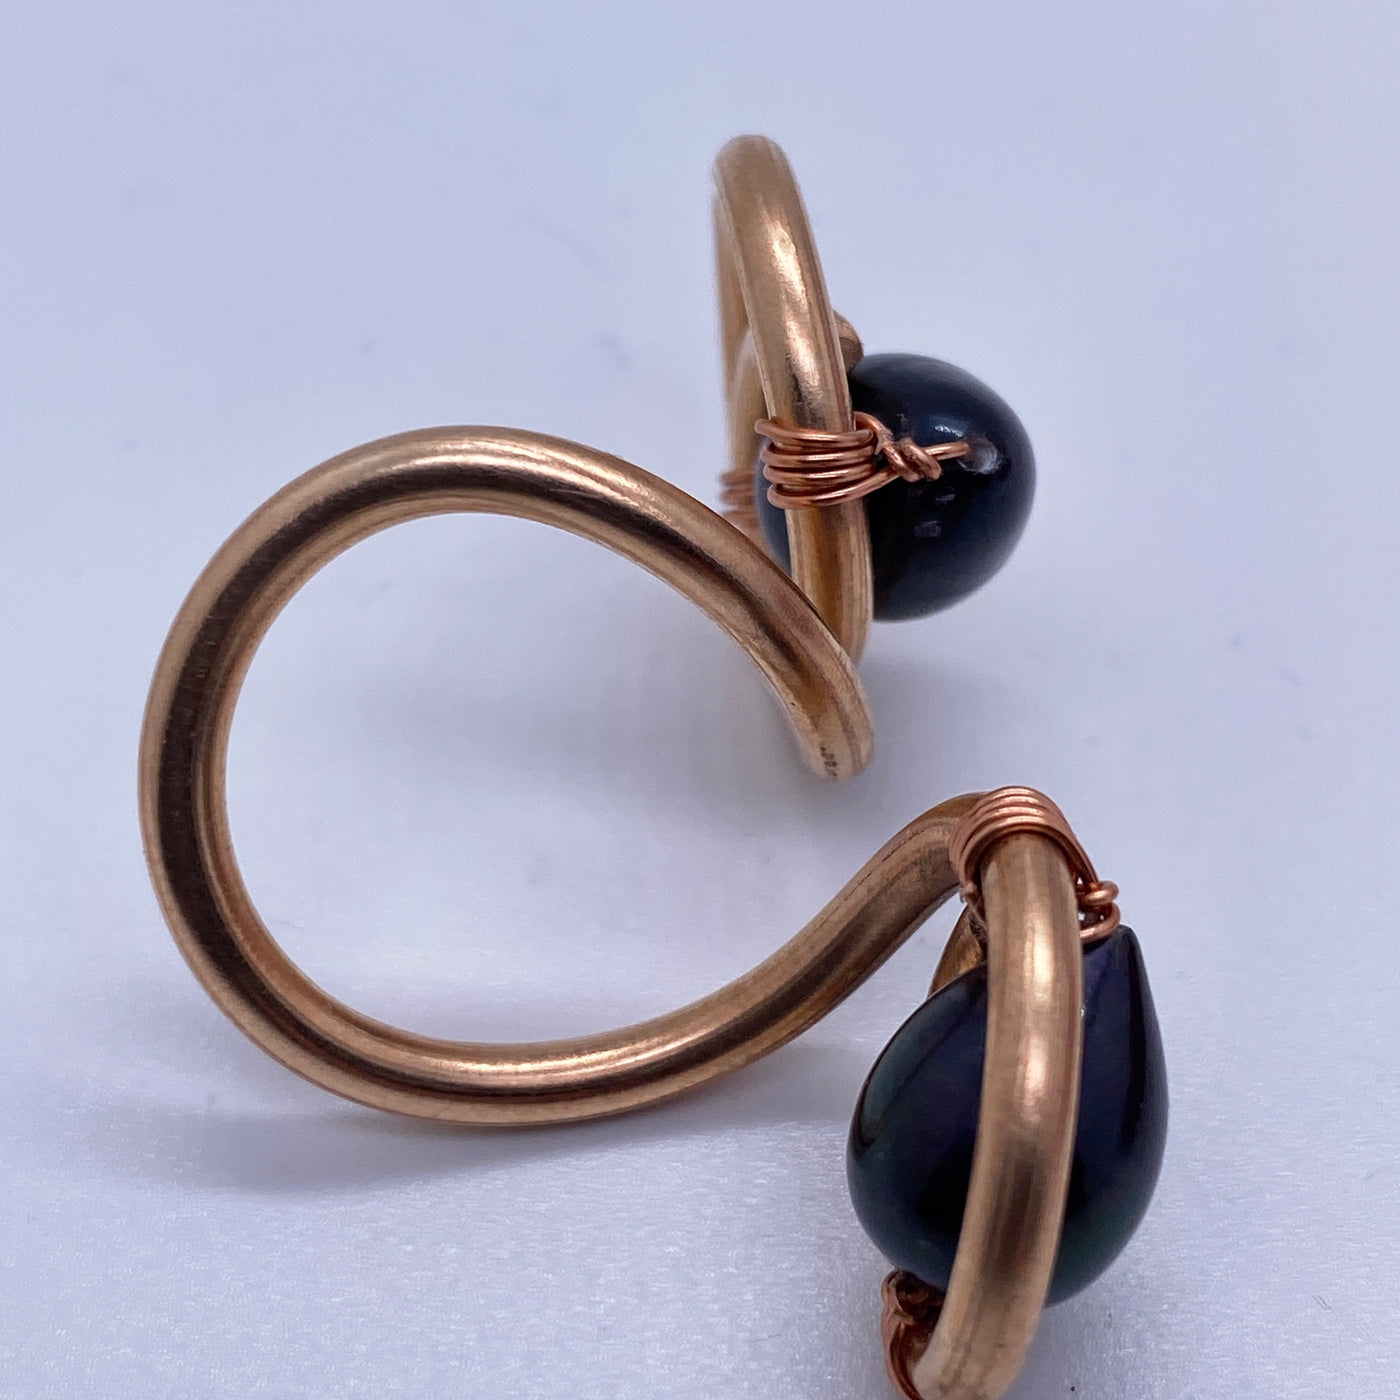 Freshwater dark pearls ring adjustable size 